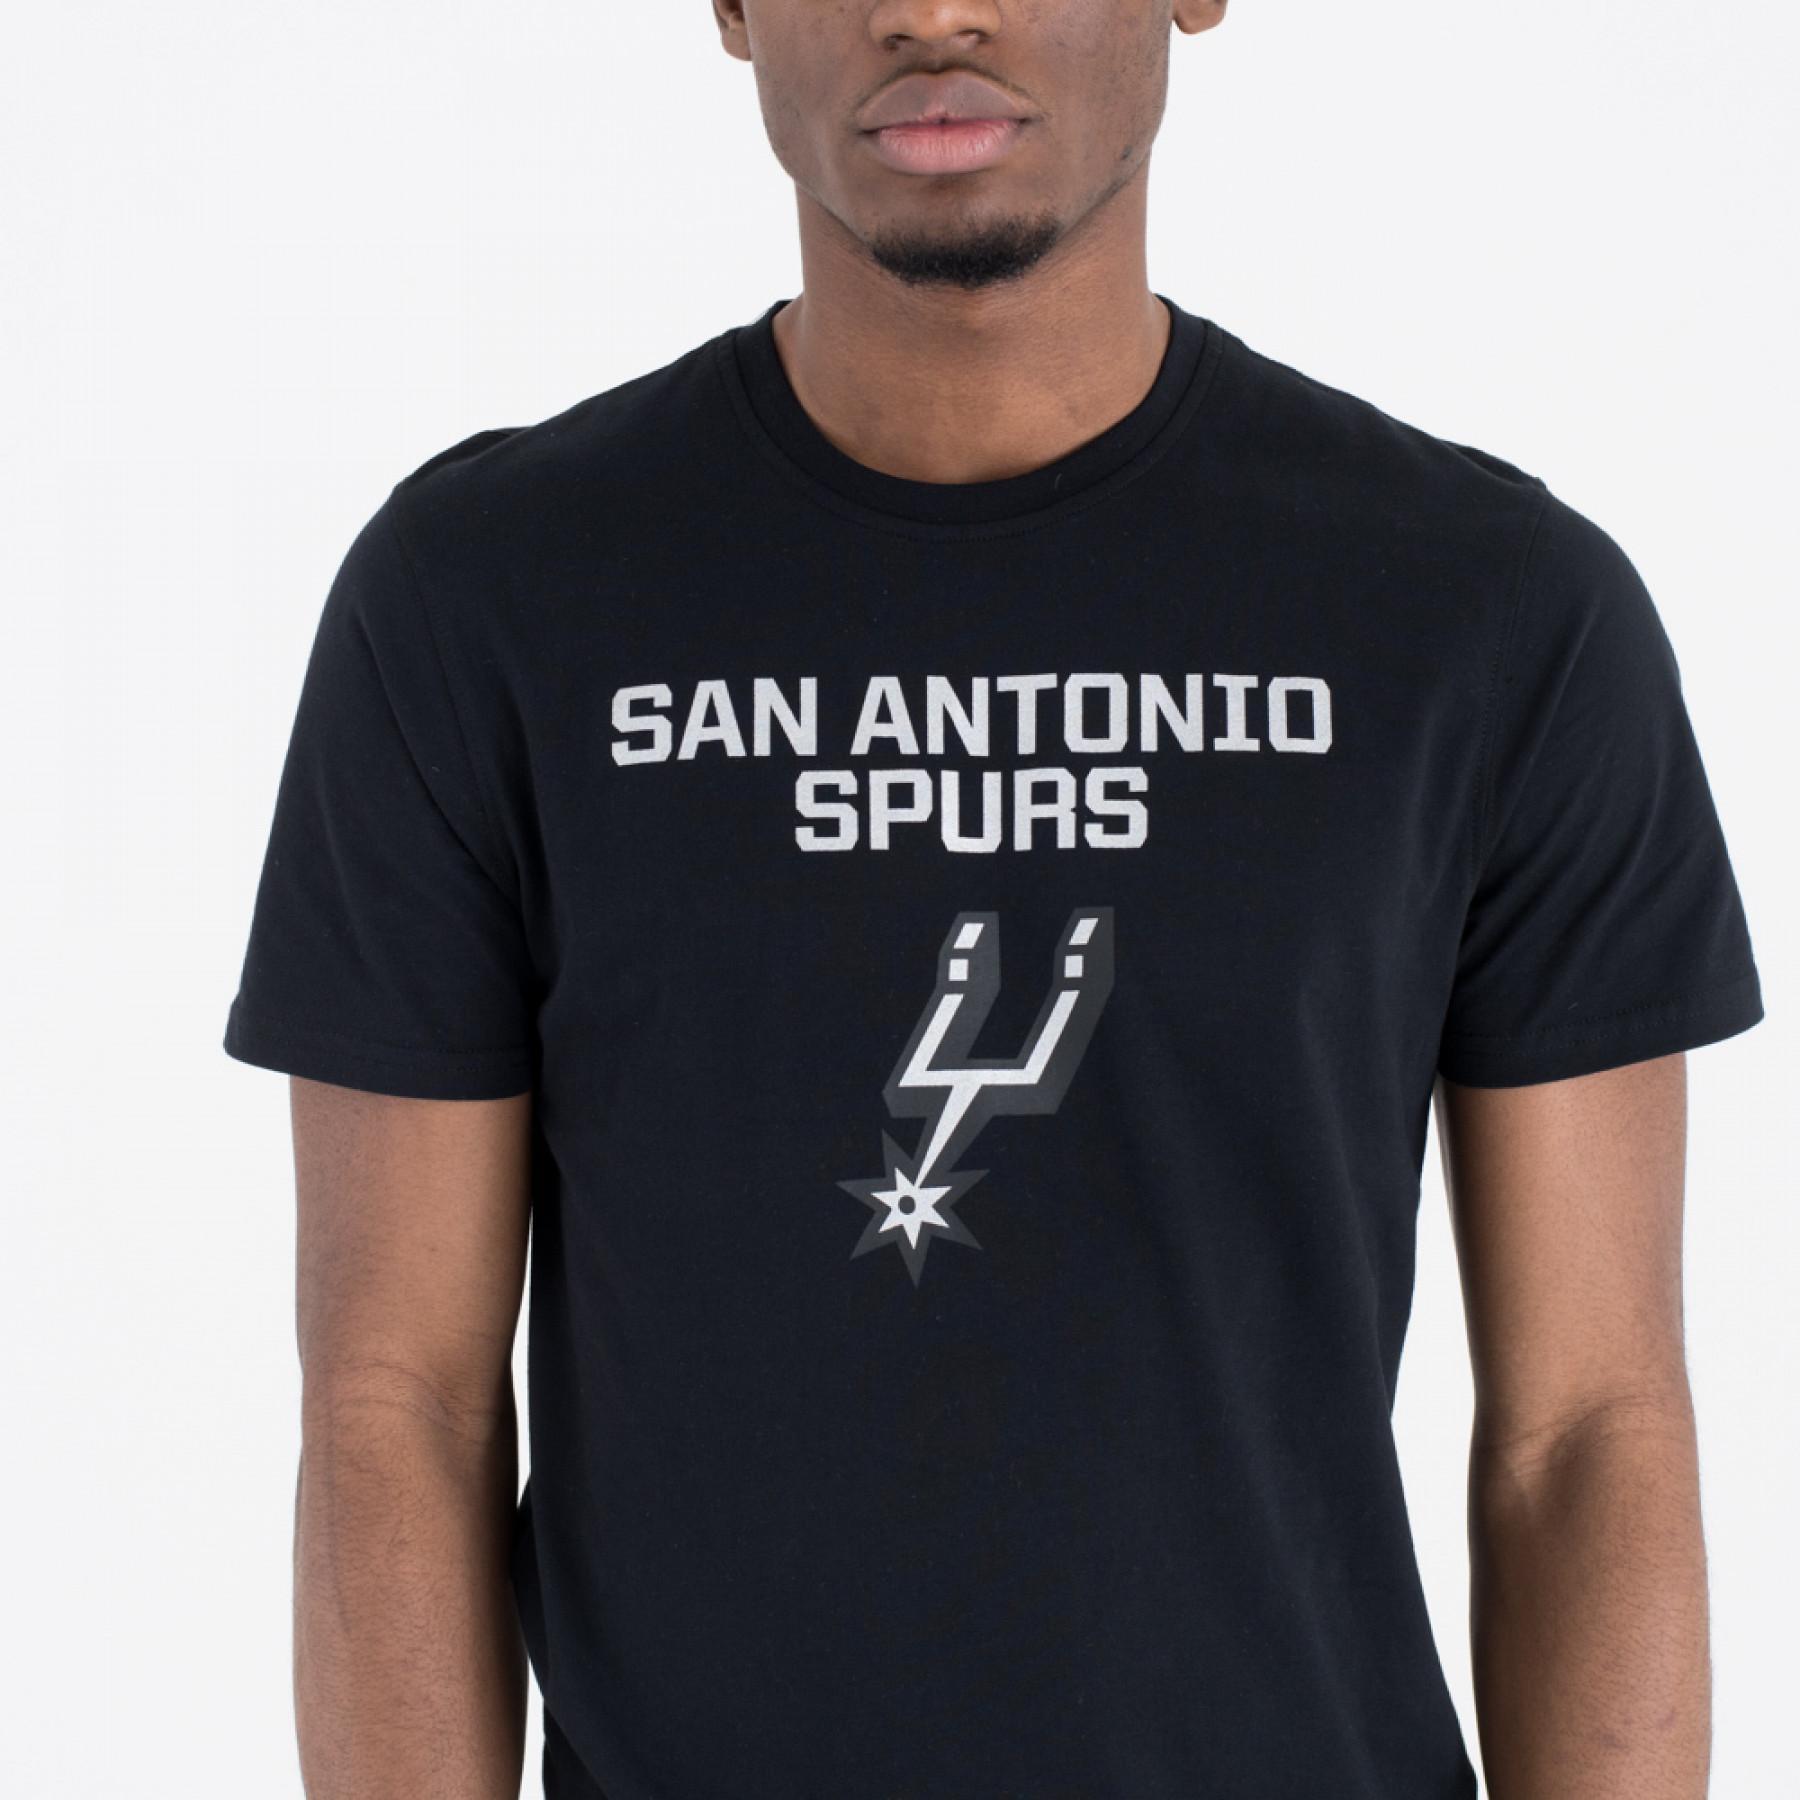  New EraT - s h i r t   logo San Antonio Spurs